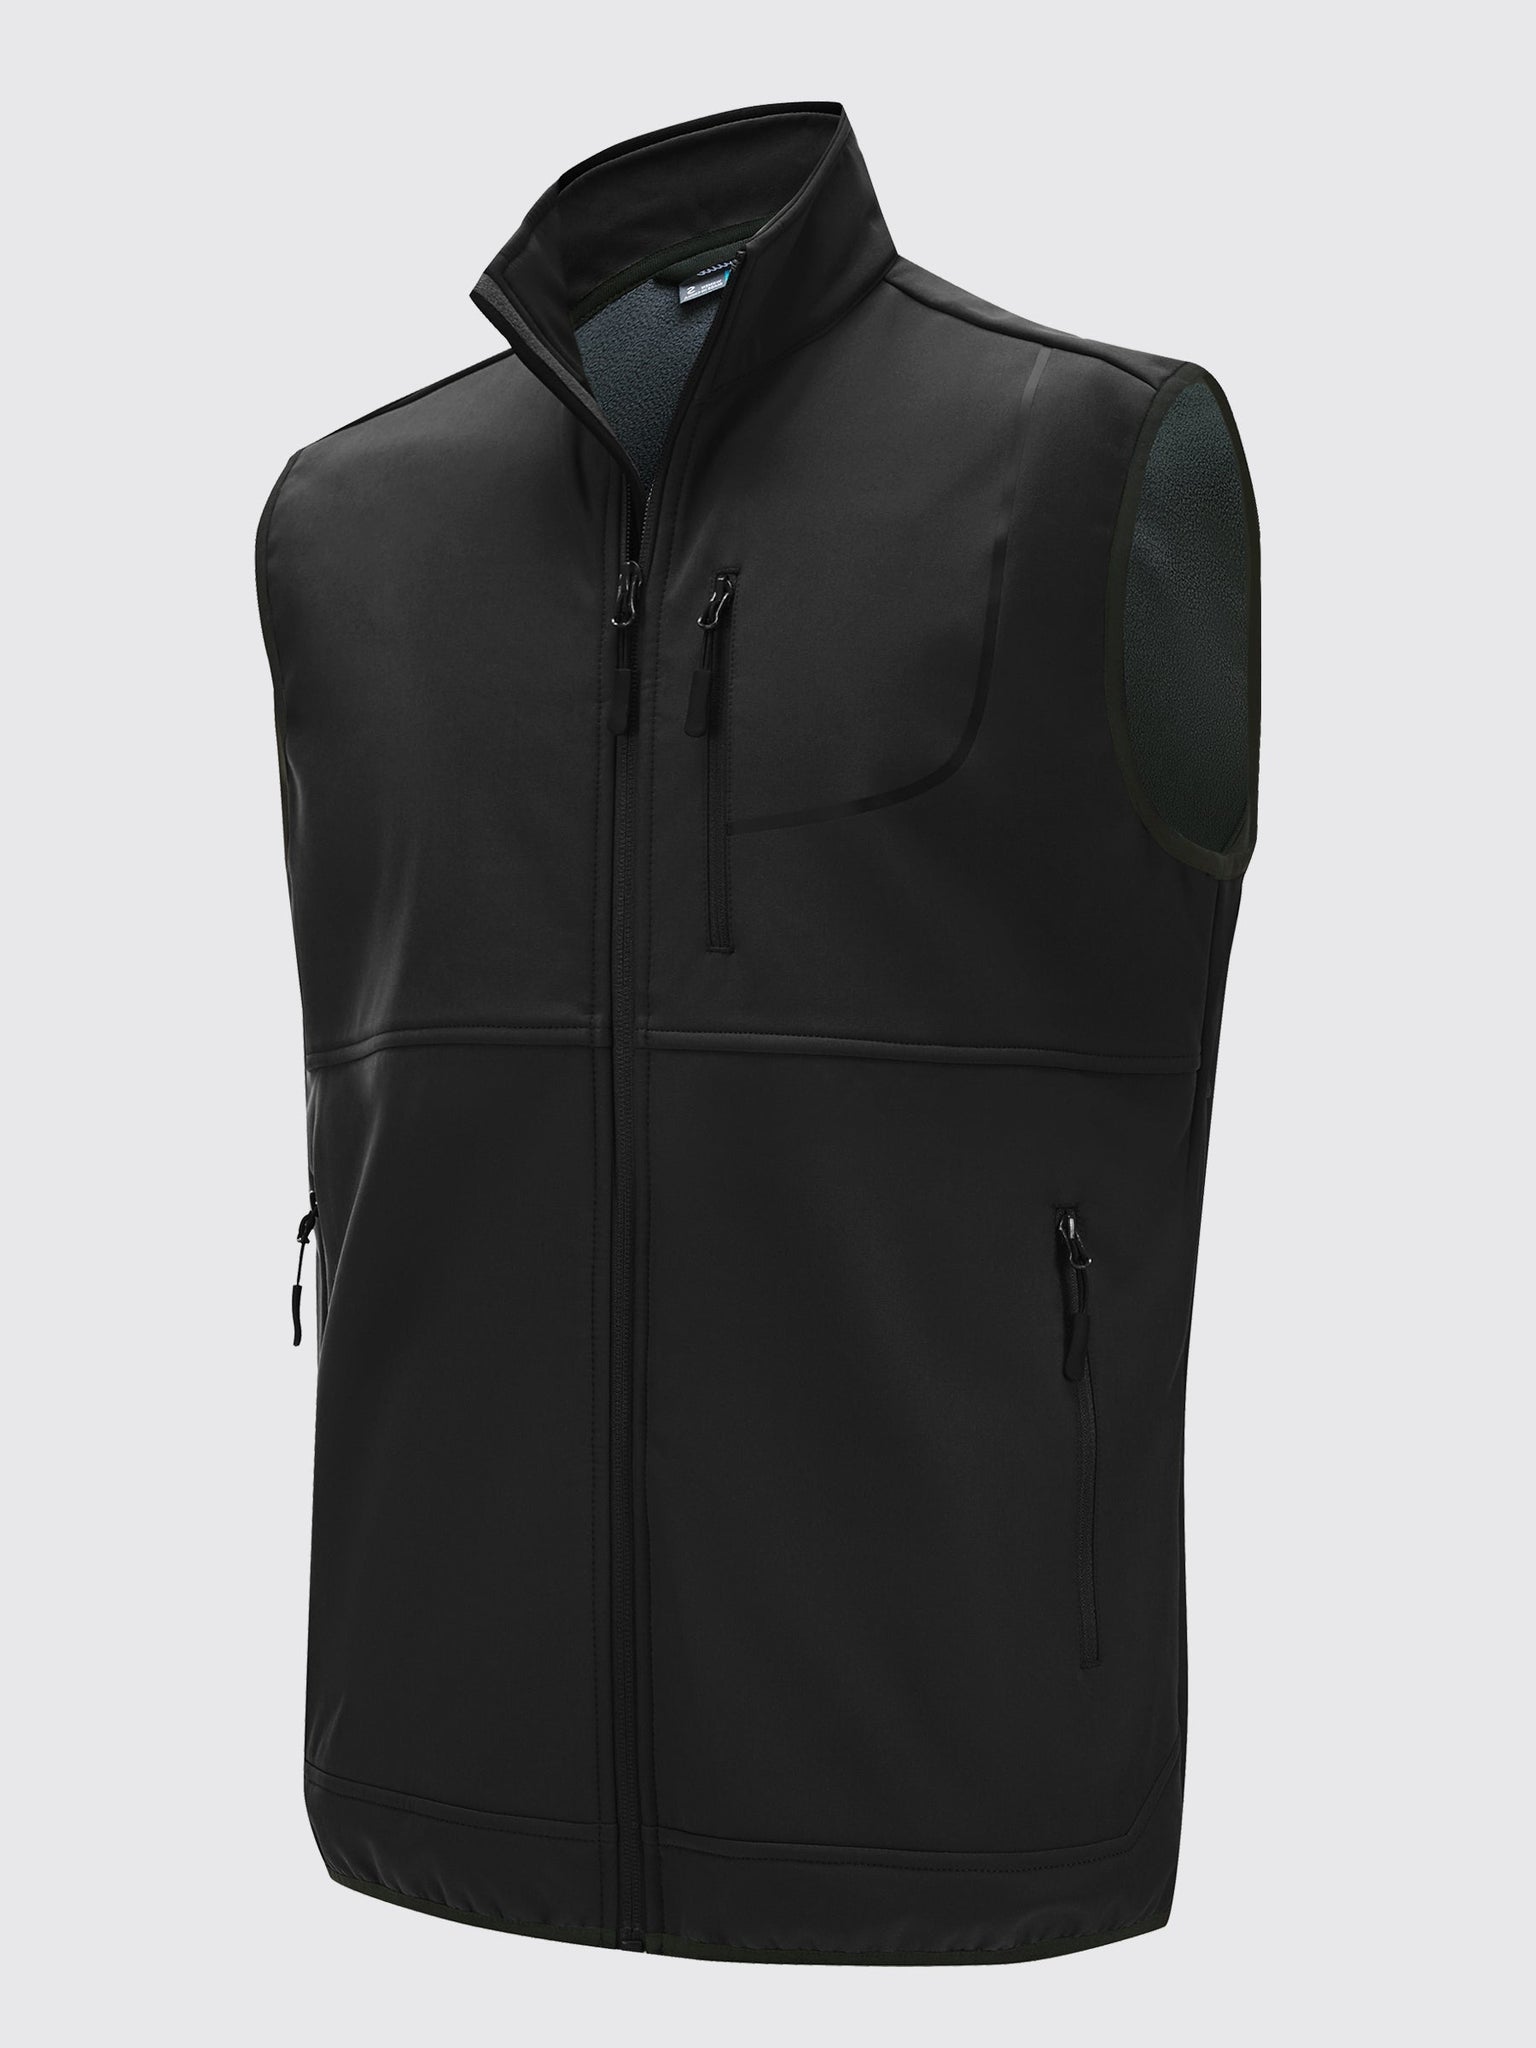 vWillit Men's Softshell Vest Fleece Lined Outerwear_Black2